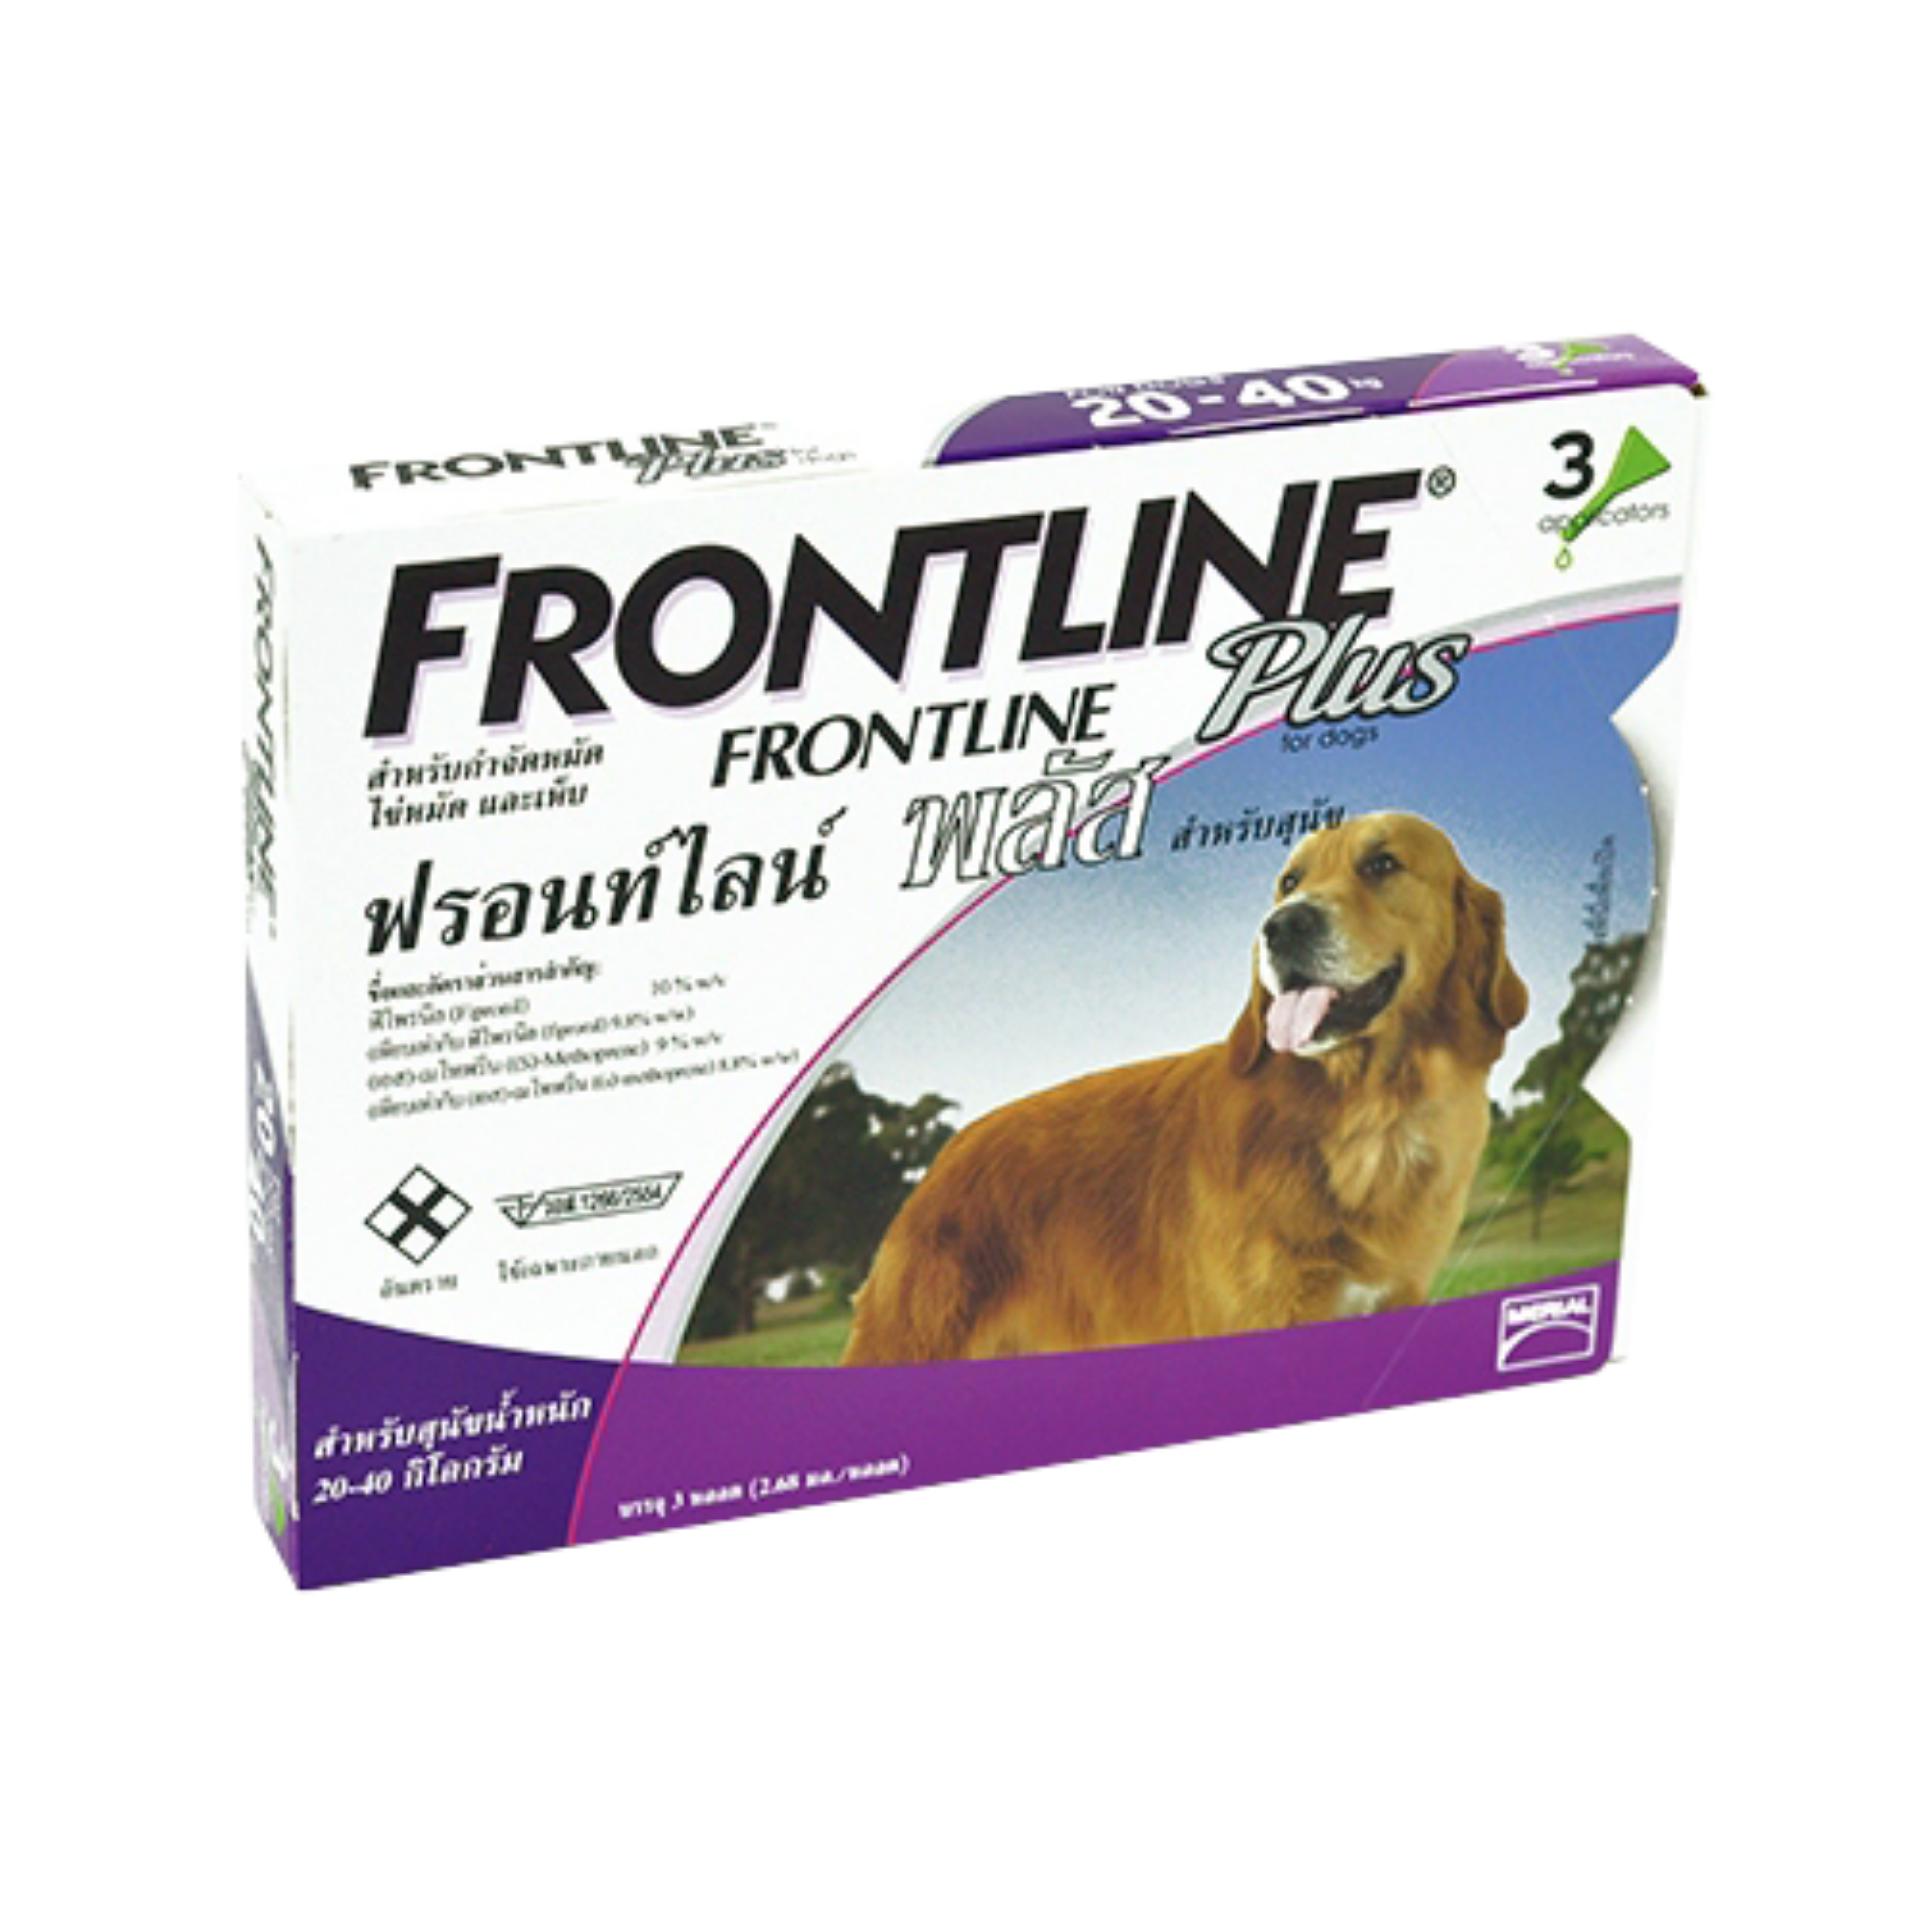 Frontline Plus Large Dogs ยาหยดหลัง ยาหยอดเห็บหมัด สำหรับสุนัข น้ำหนัก 20-40 Kg. อายุ 8 สัปดาห์ขึ้นไป (3 หลอด/กล่อง) x 4 กล่อง